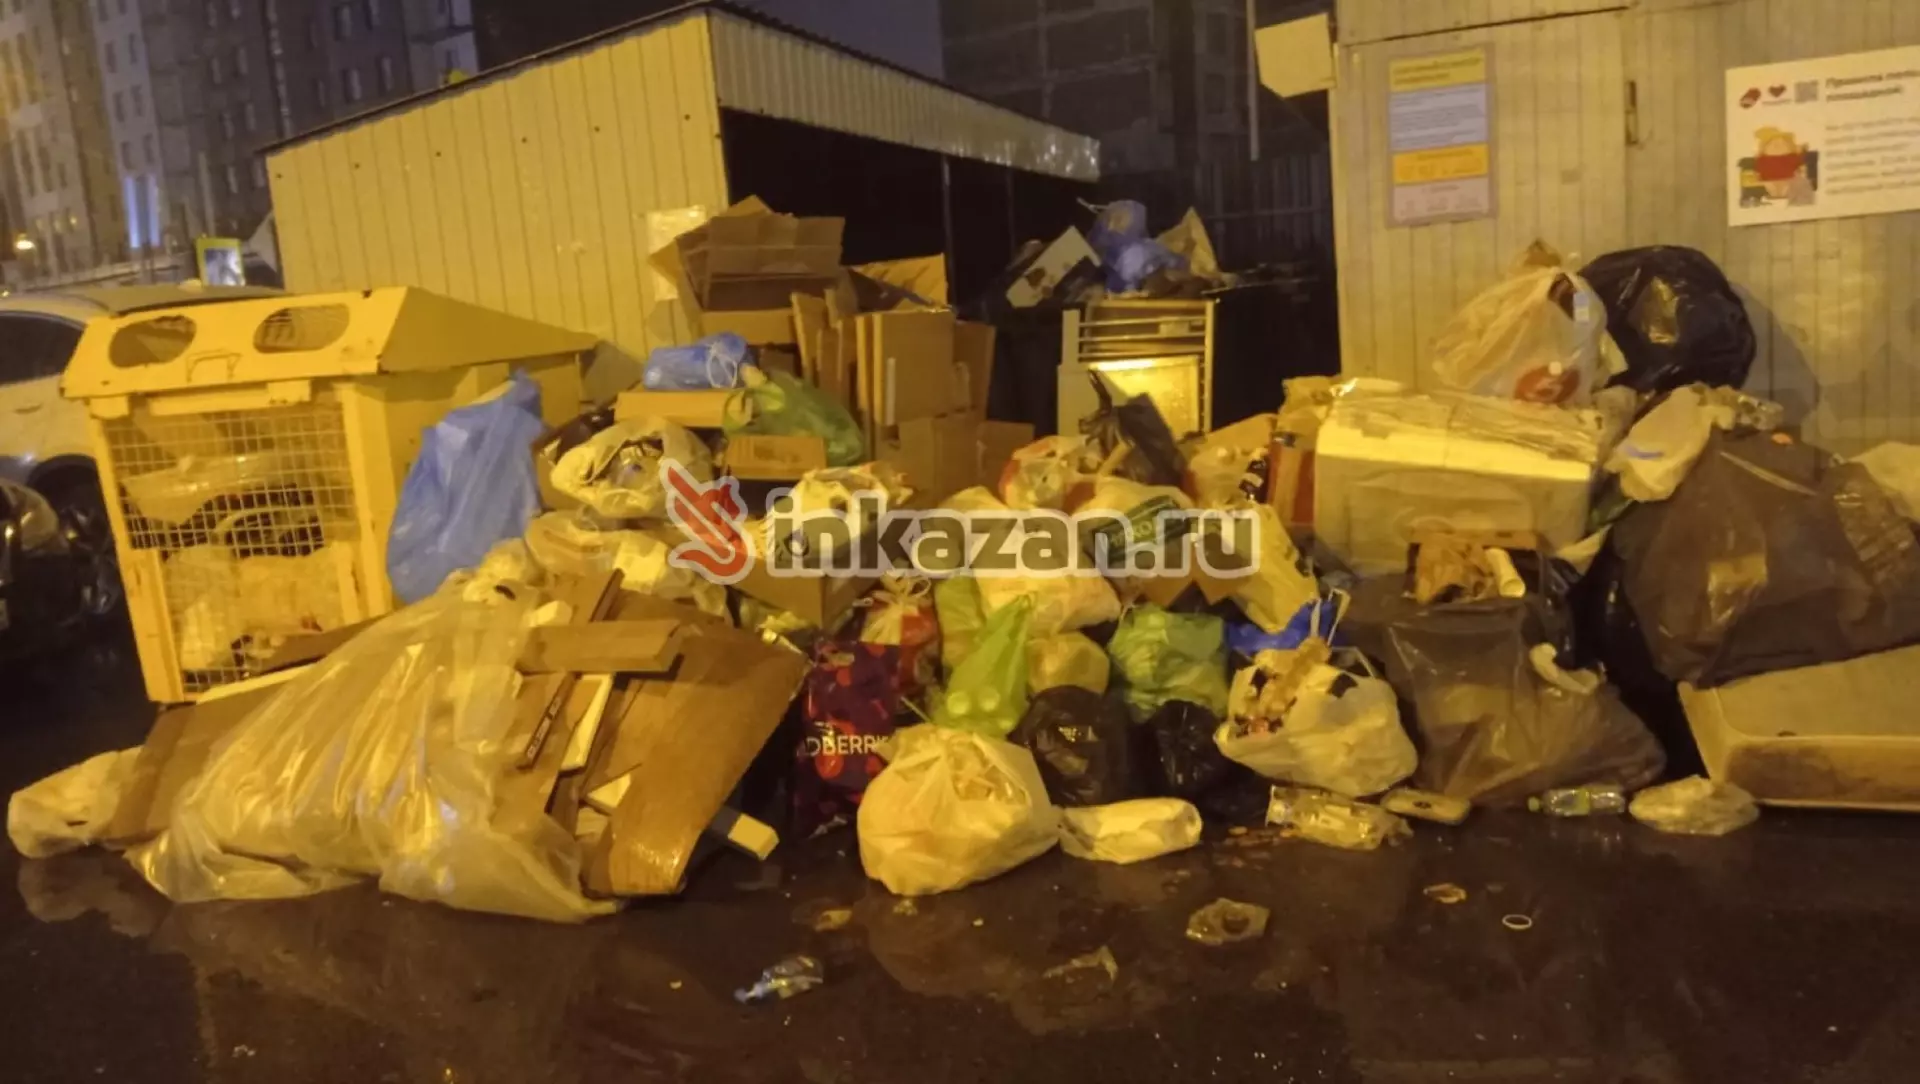 На окраине Казани жители остались без уборки мусора